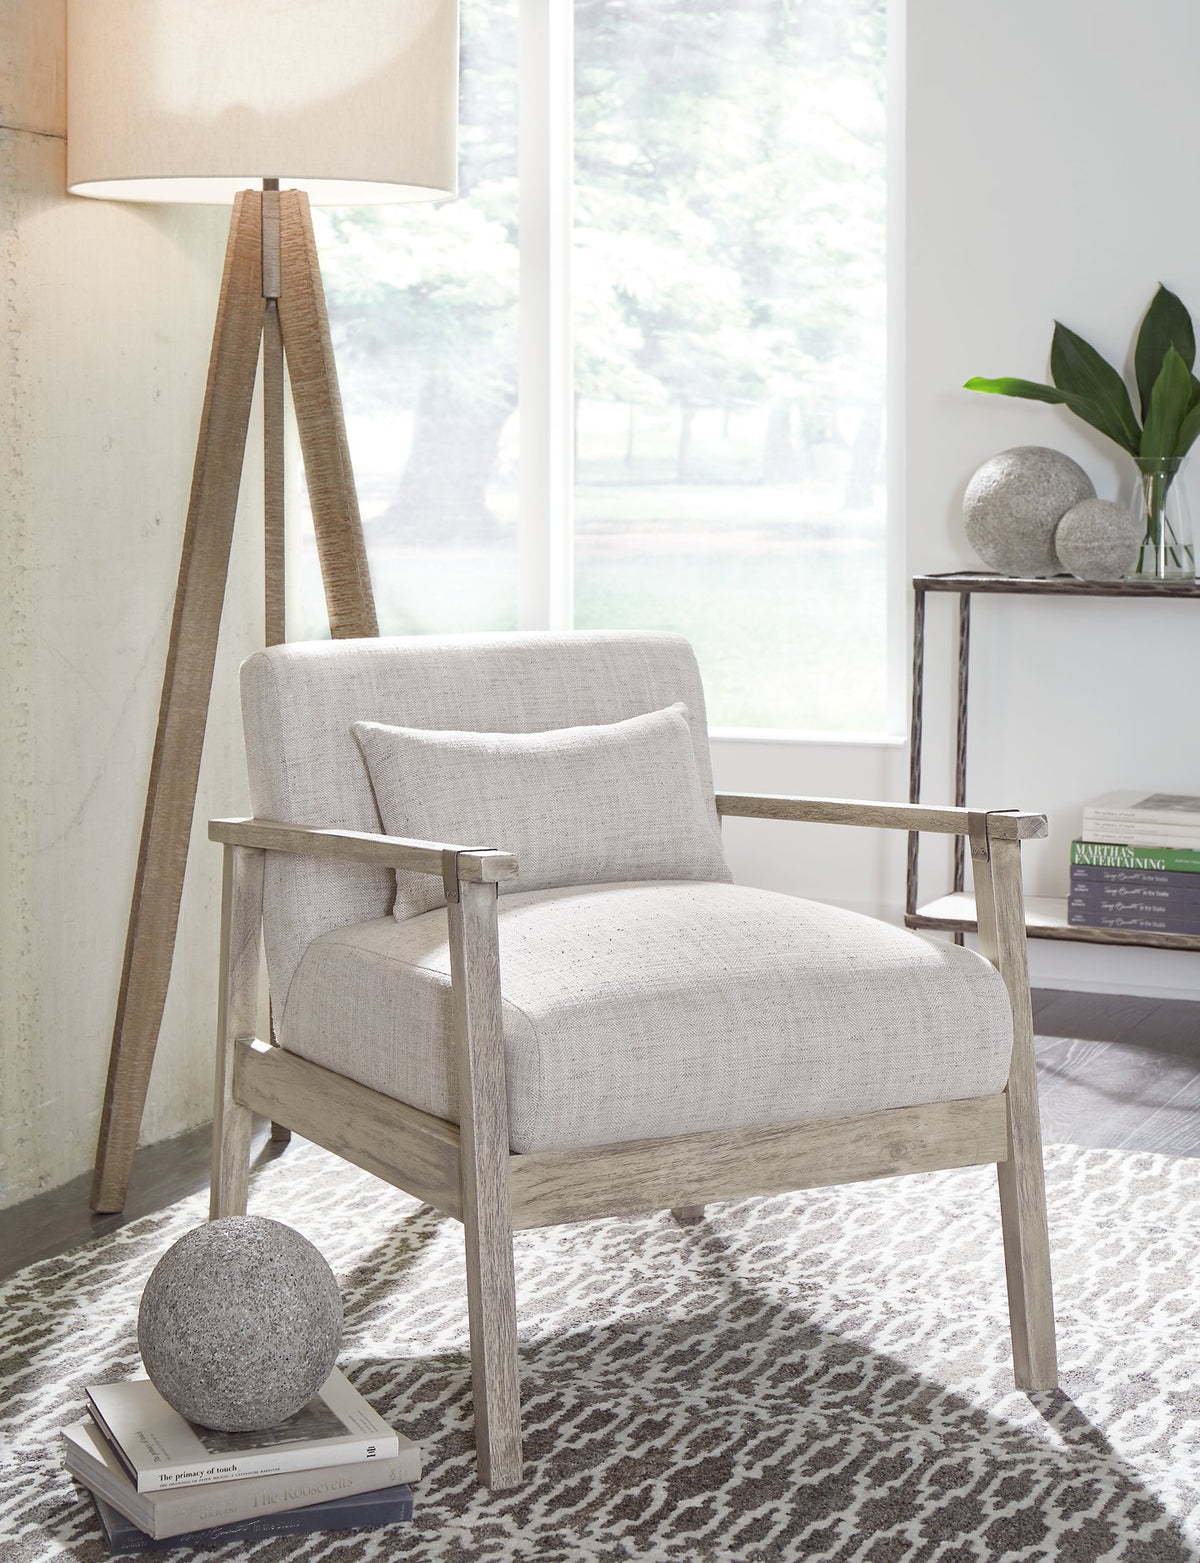 Dalenville Accent Chair - Half Price Furniture